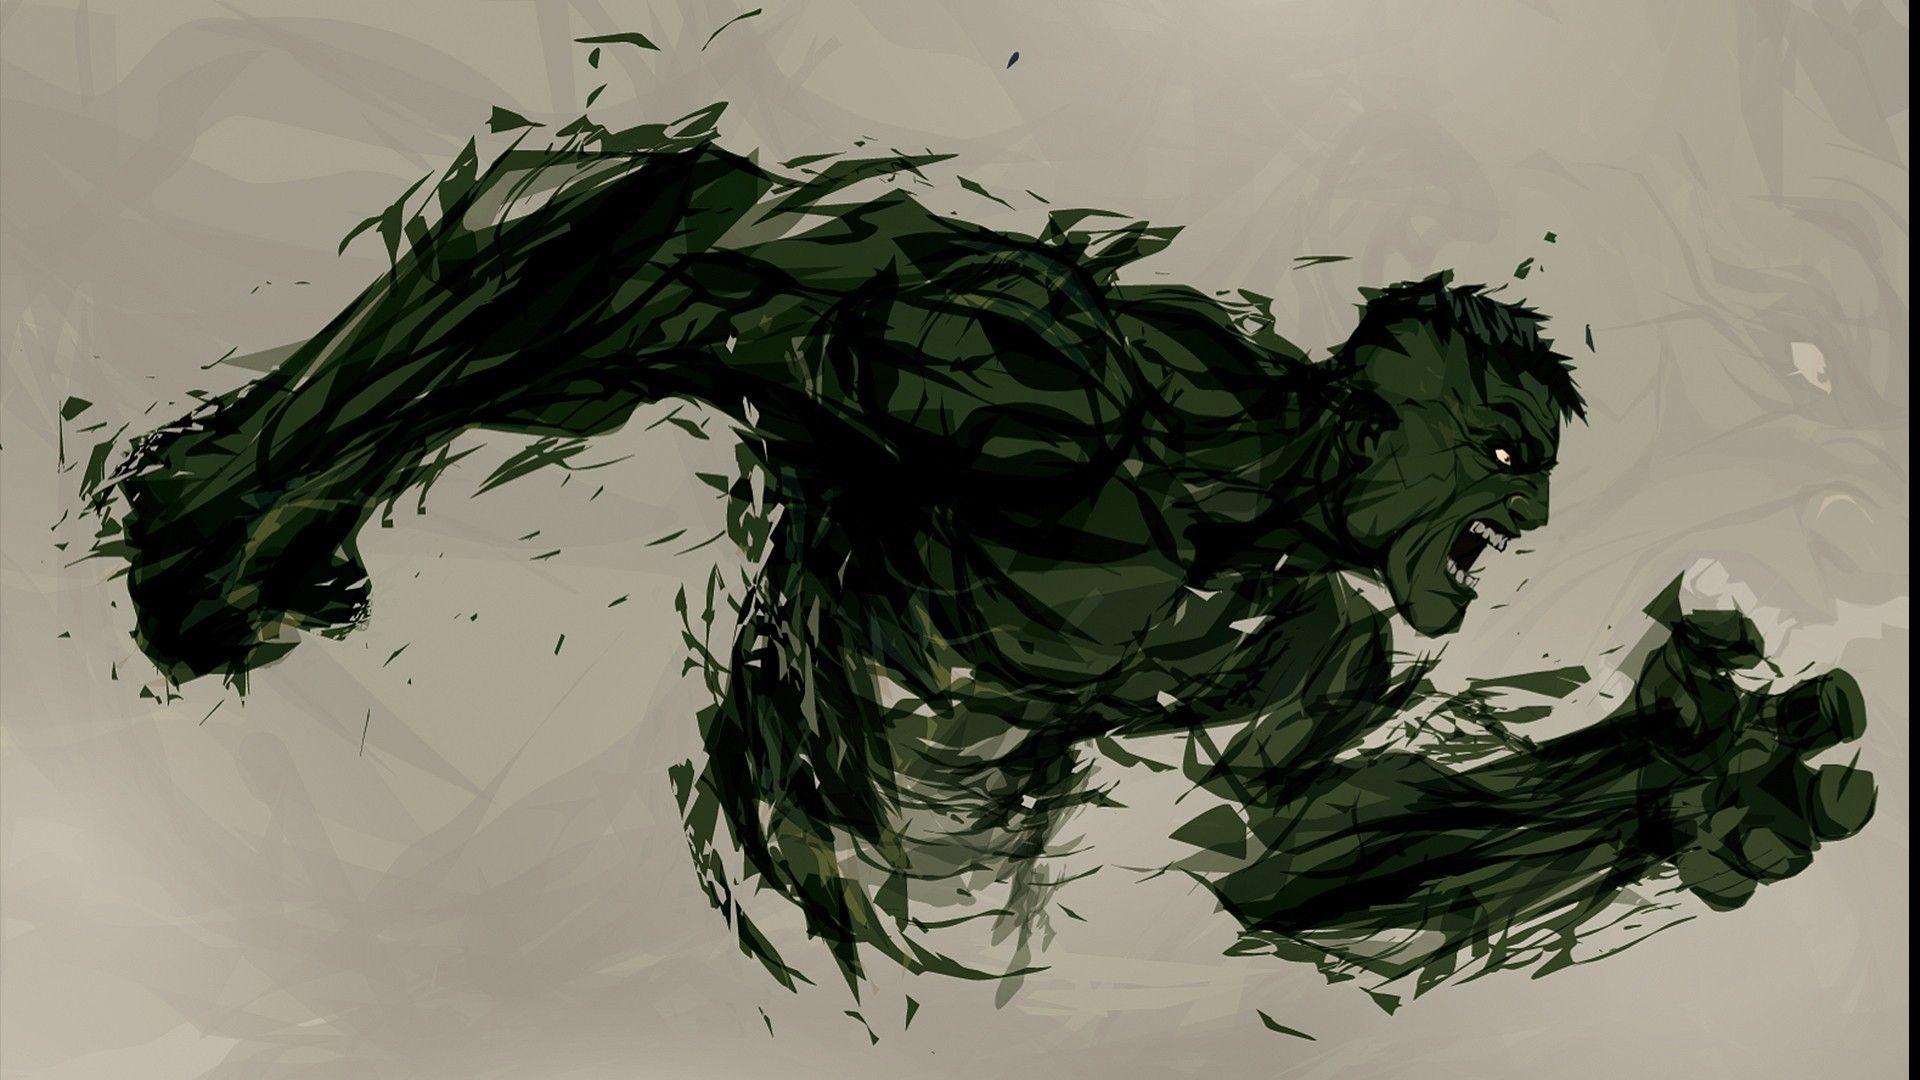 Incredible Hulk Abstract Art Exclusive HD Wallpaper #